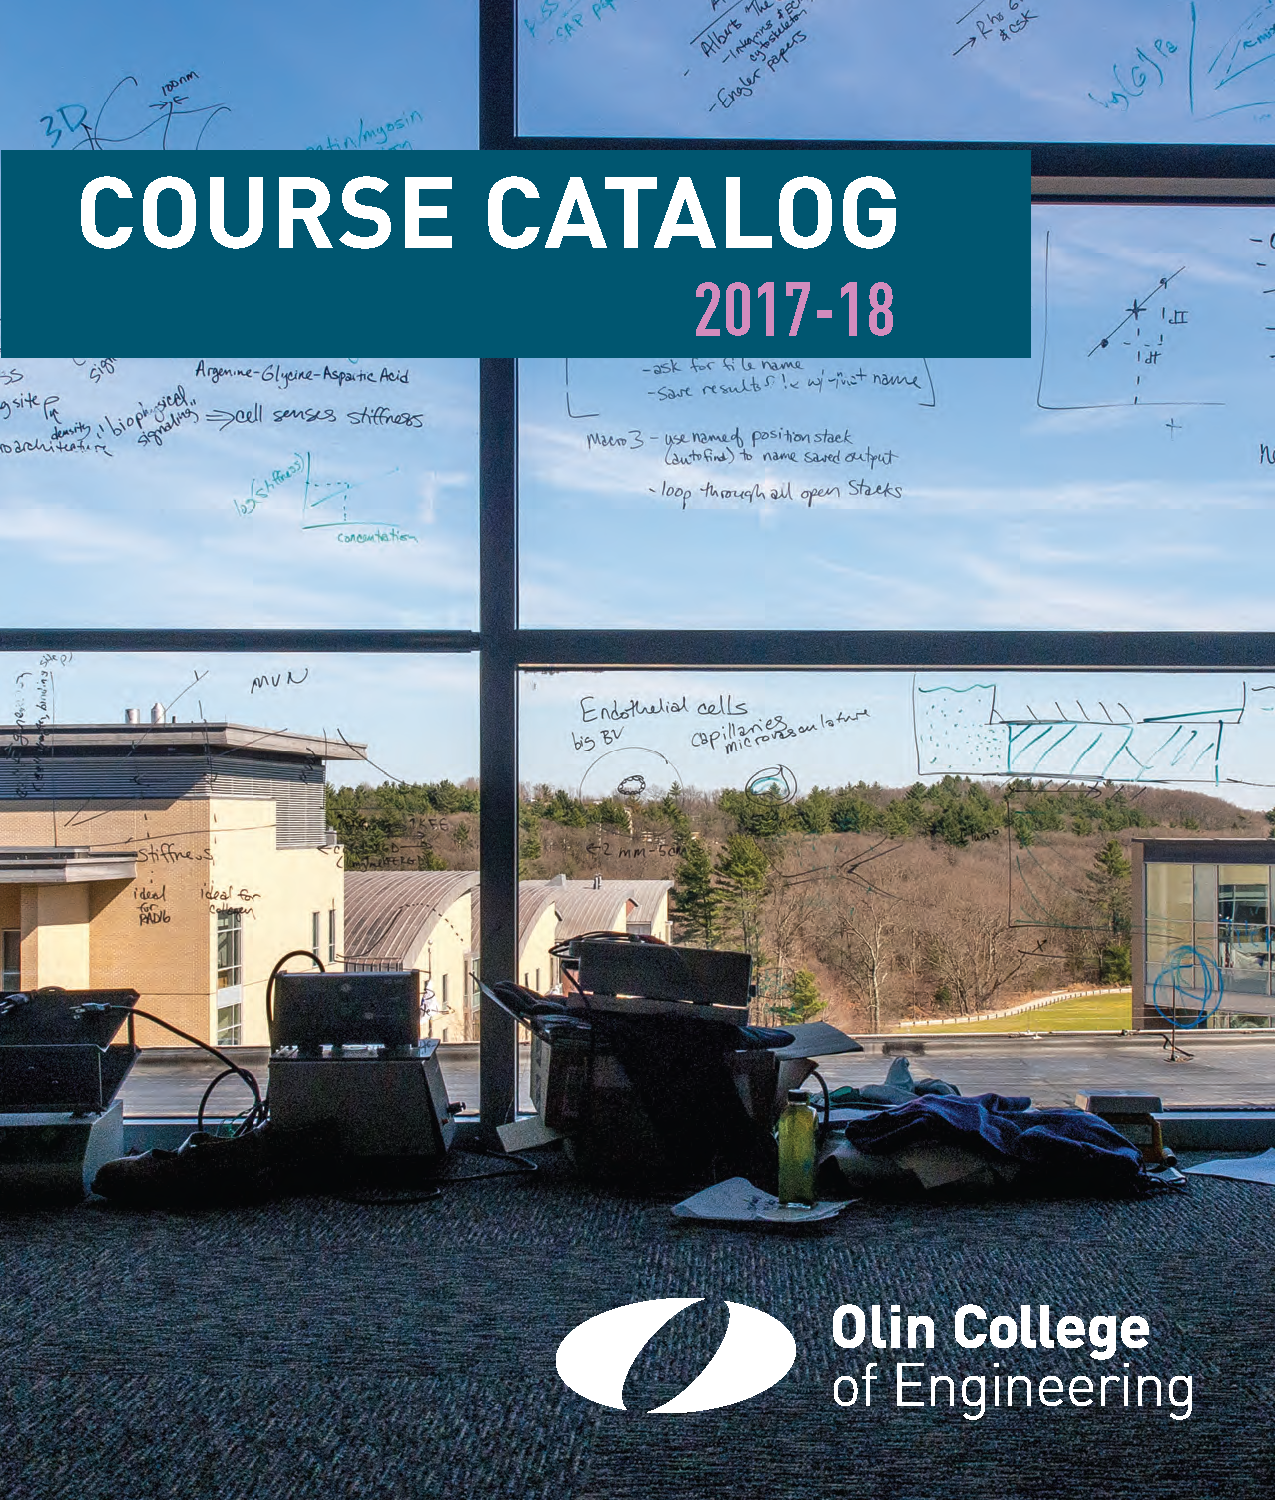 course catalog